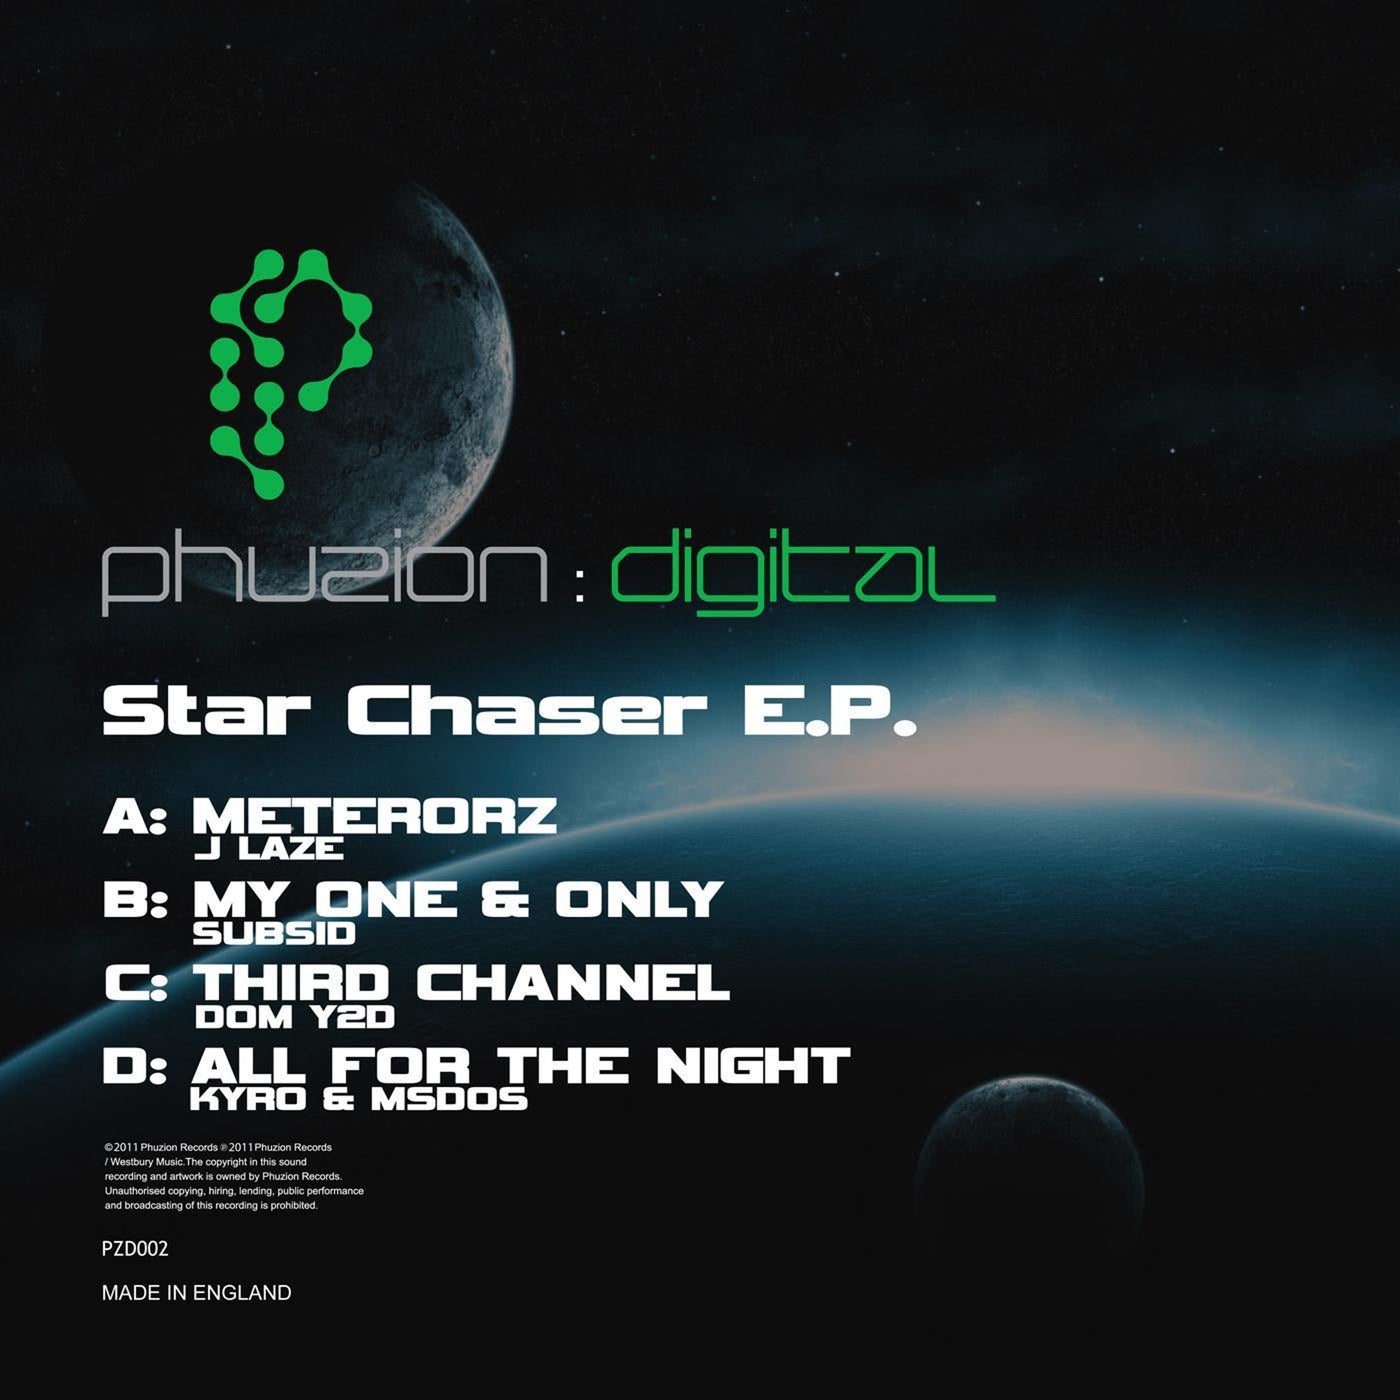 Star Chaser EP